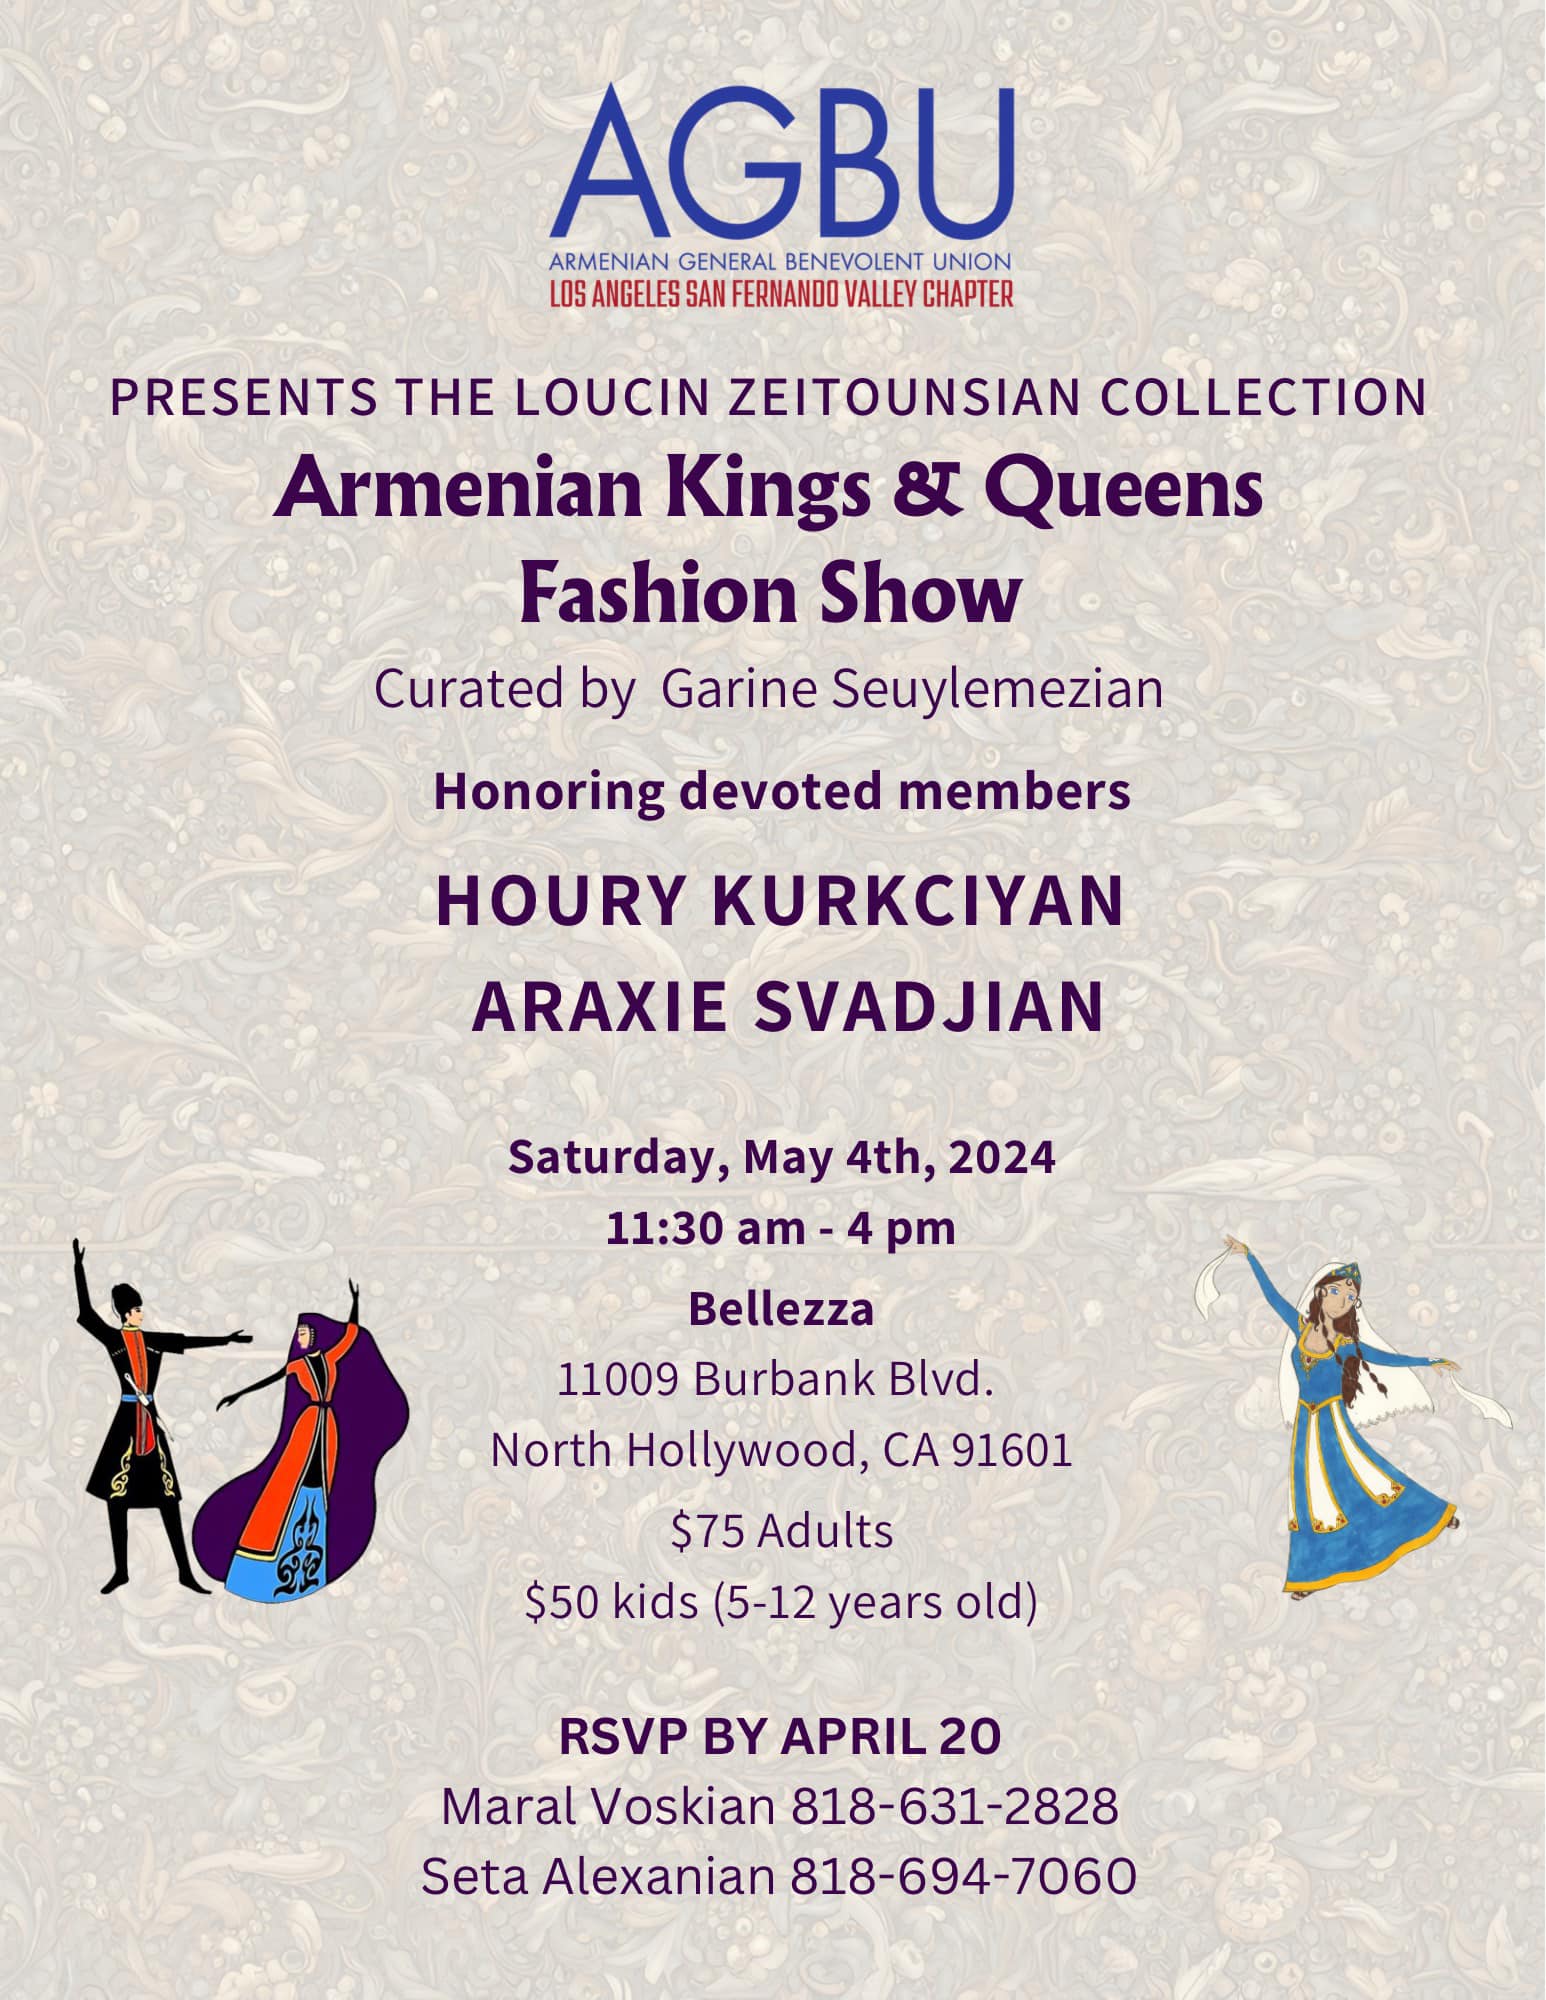 Armenian Kings & Queens Fashion Show